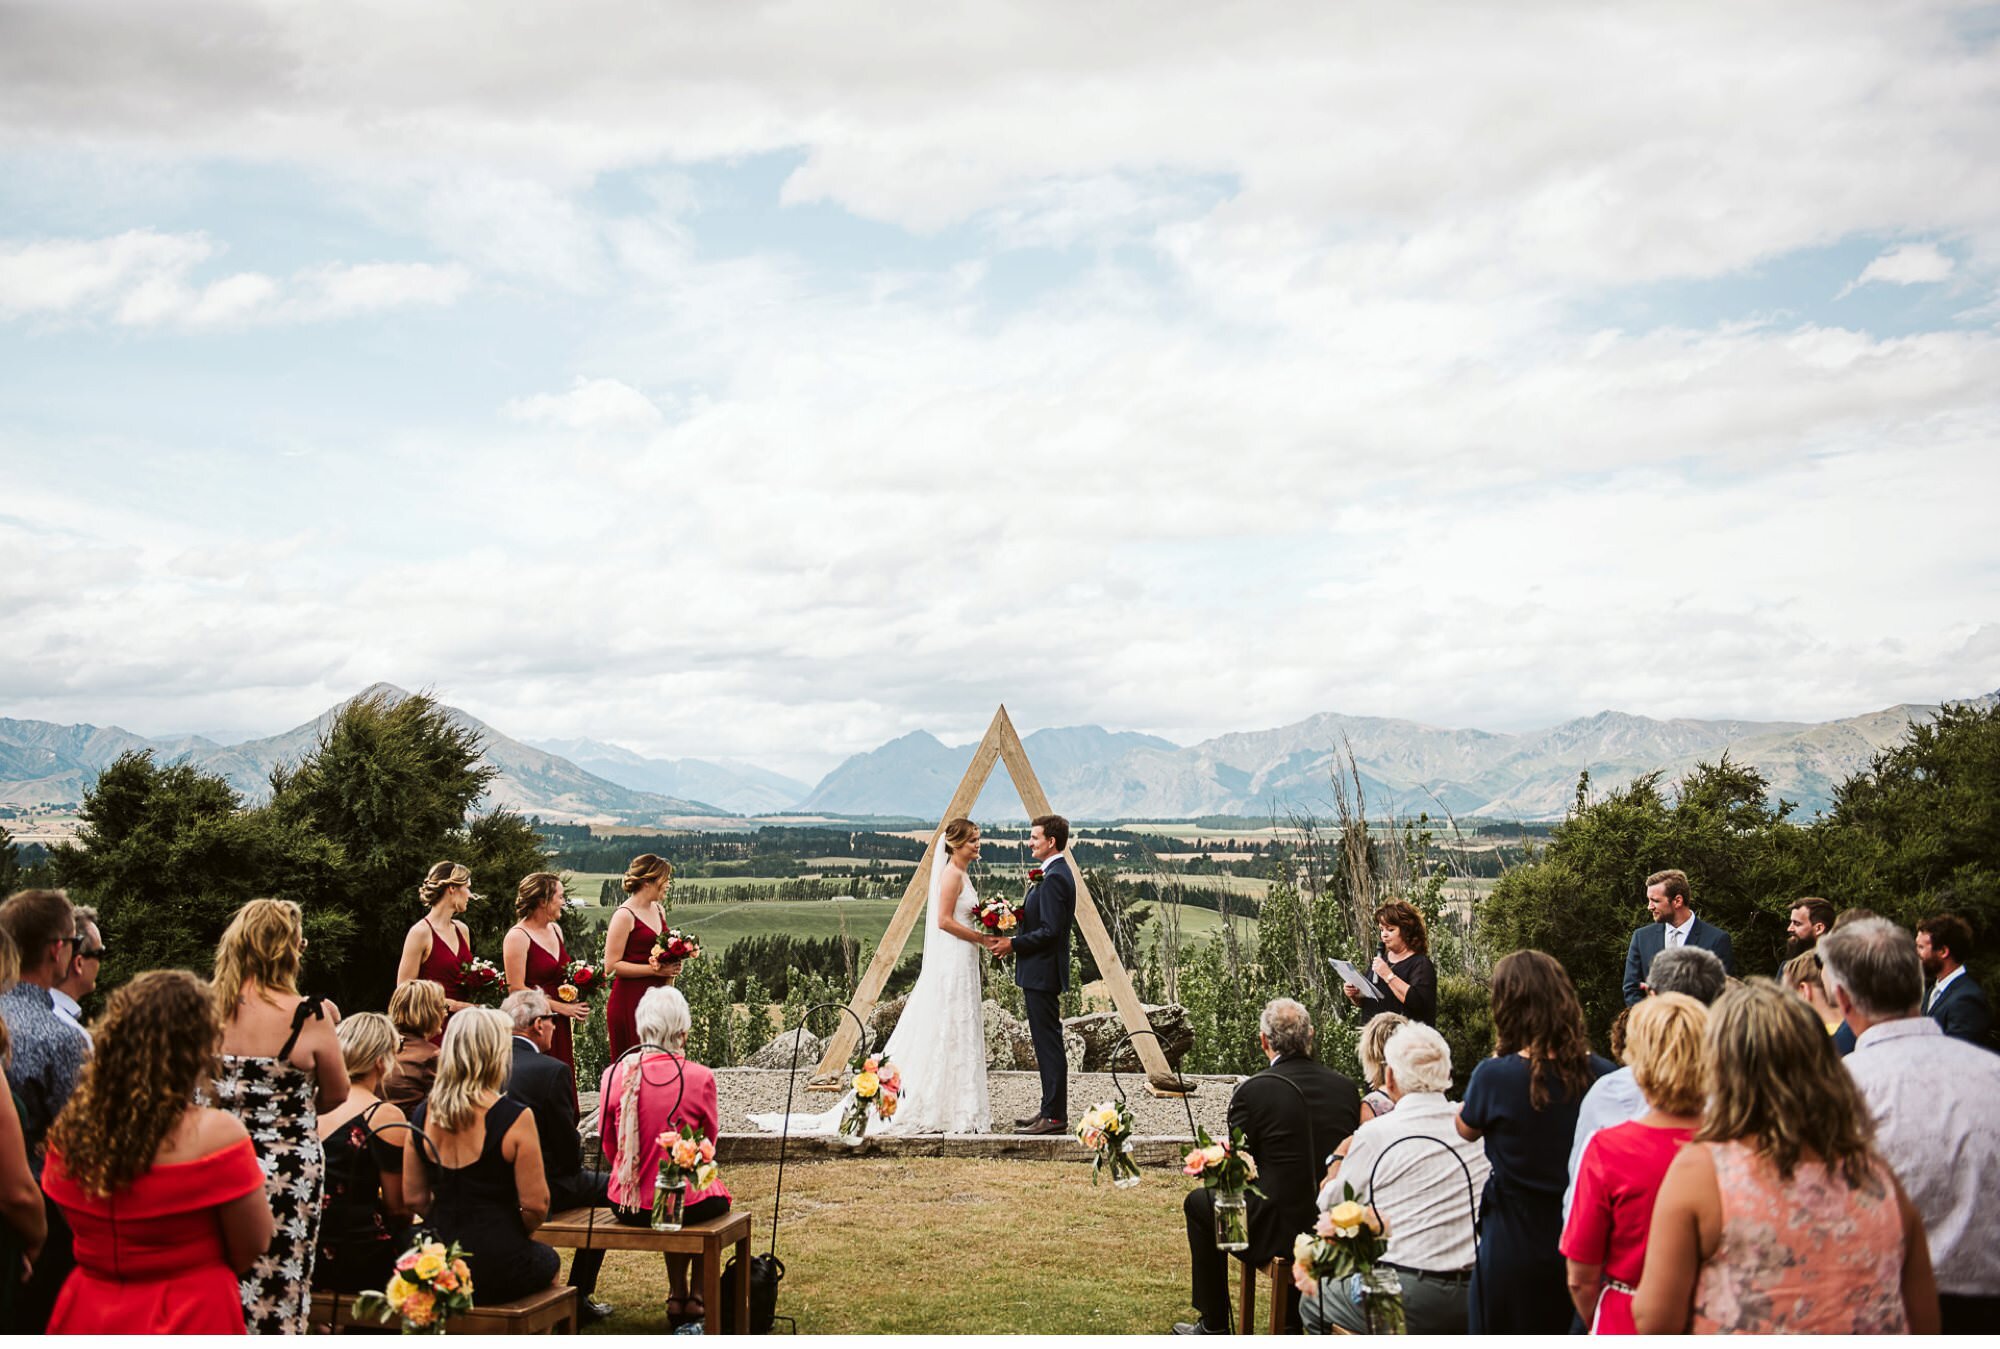 003 - New Zealand Wedding Photography Highlights.jpg